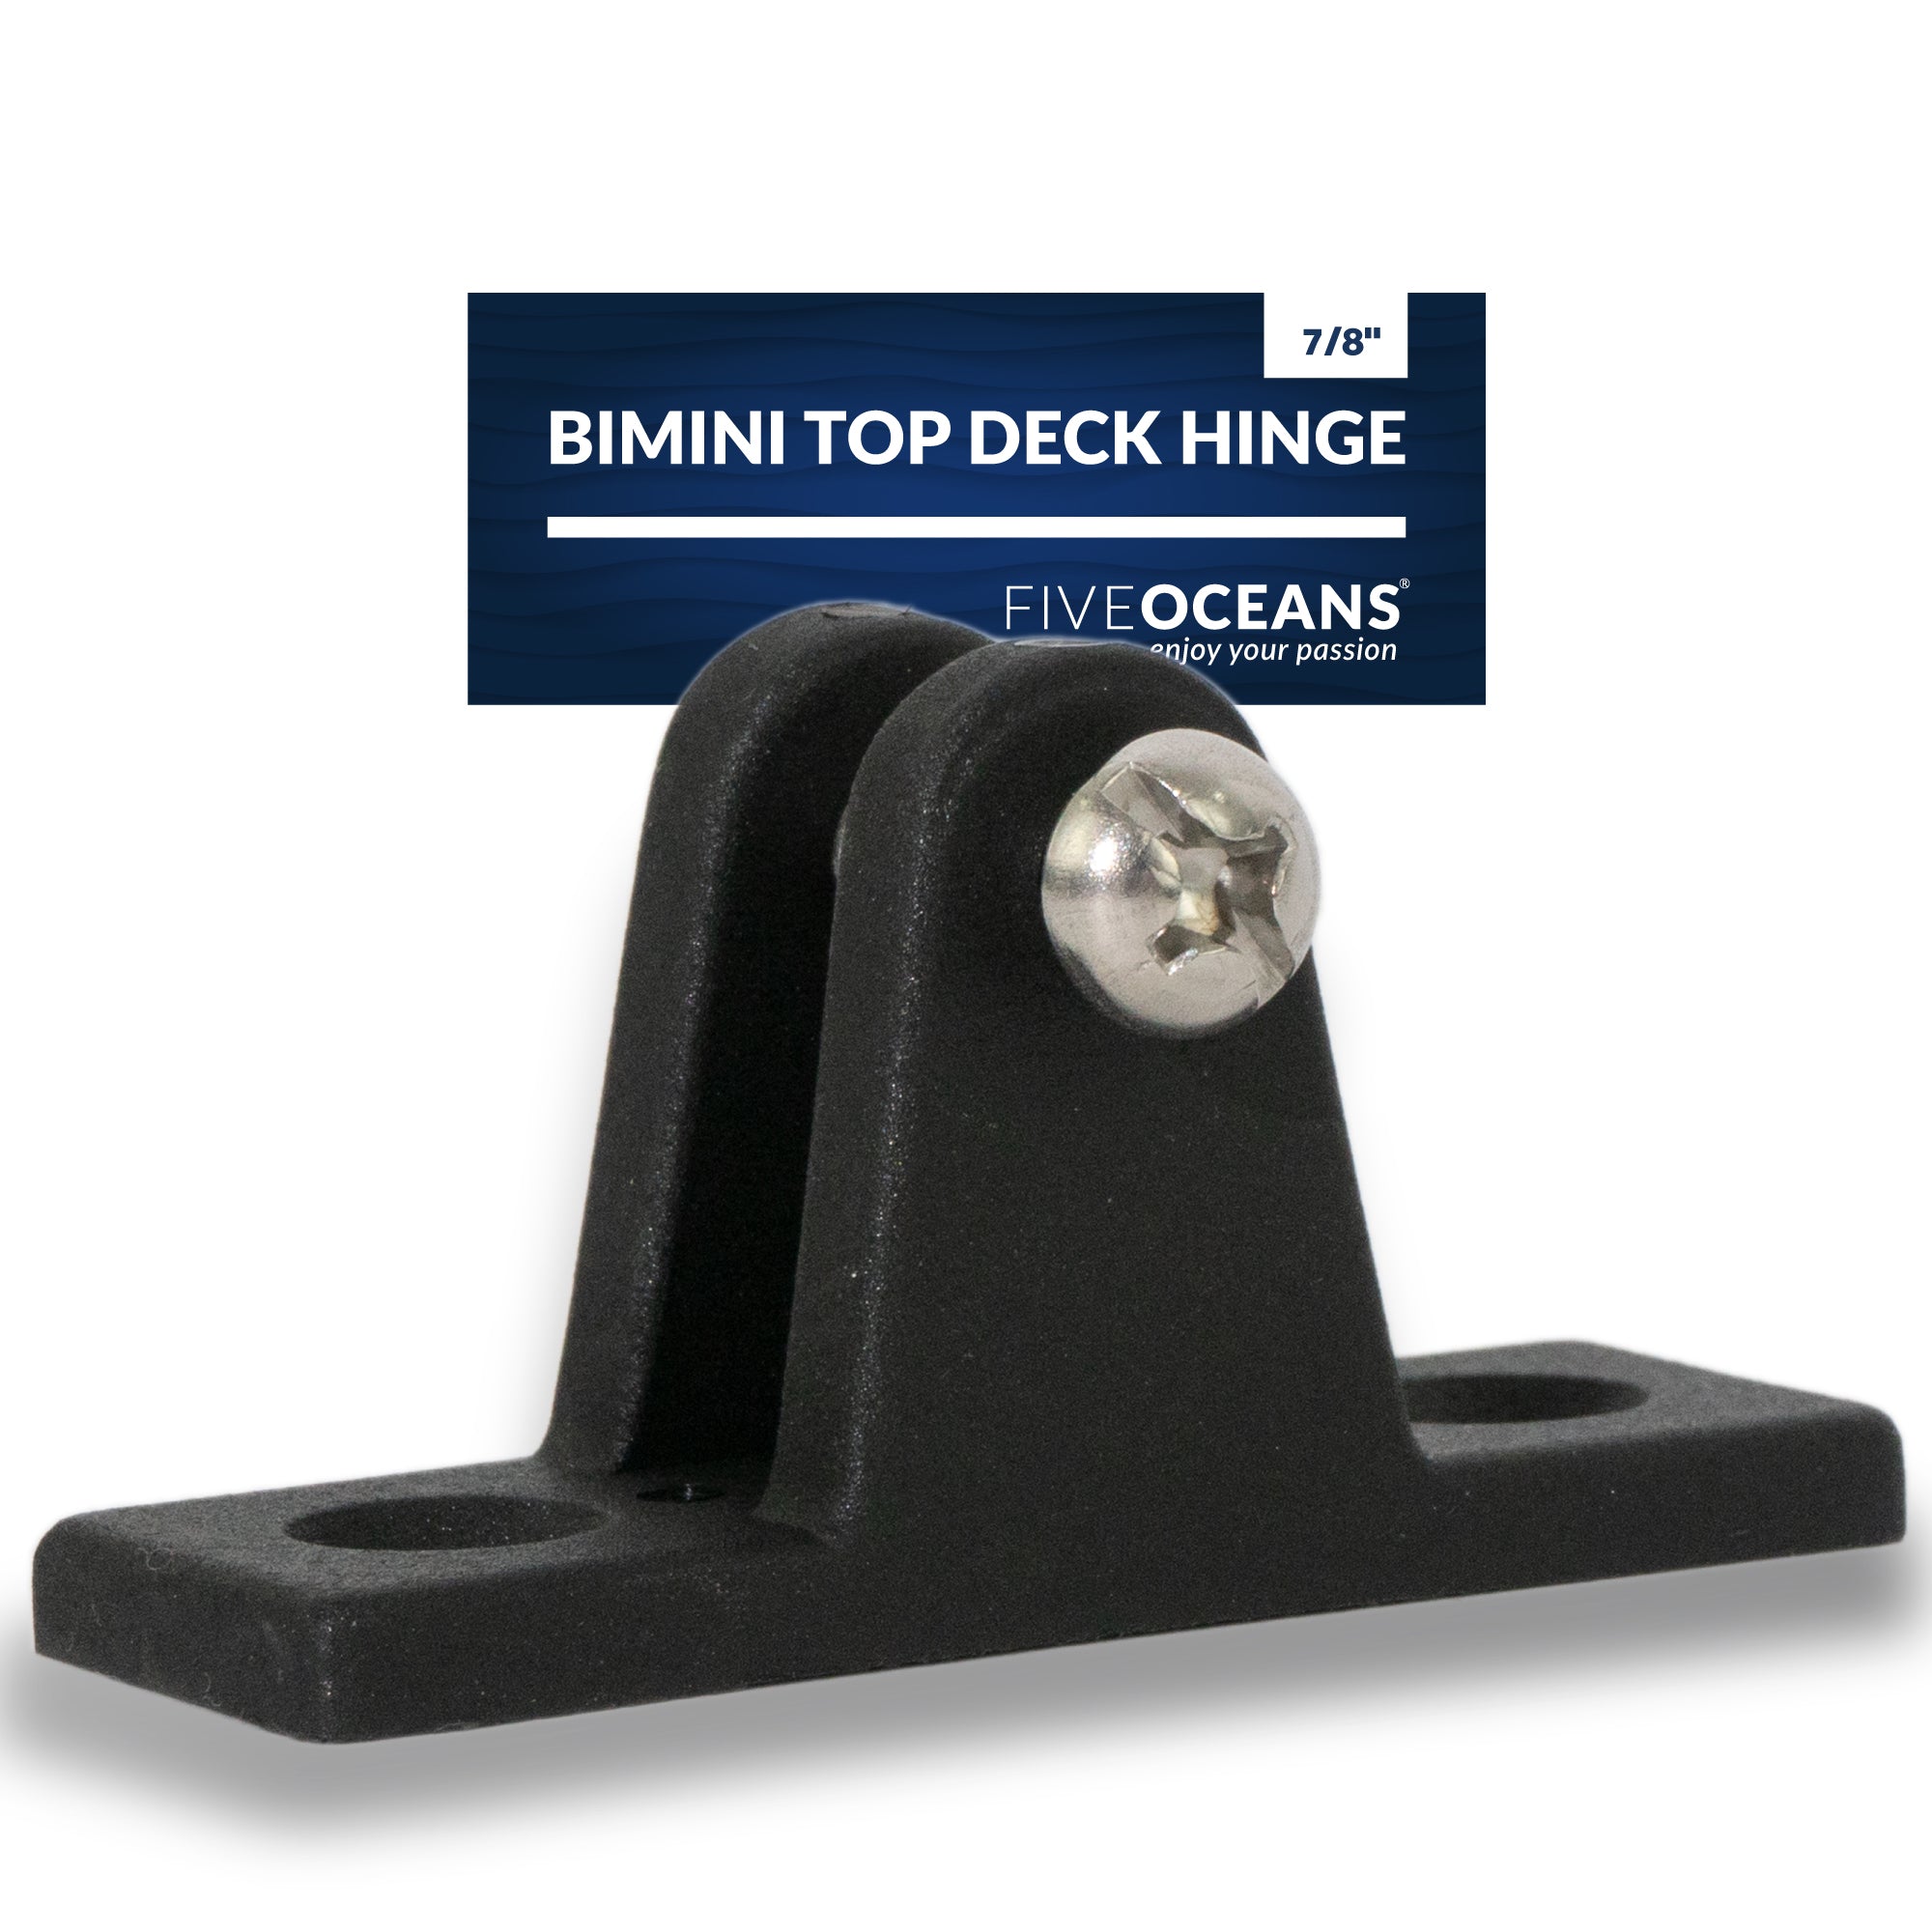 Bimini Top 90 Degree Deck Hinge, Screw Pin, Black Nylon - FO3847